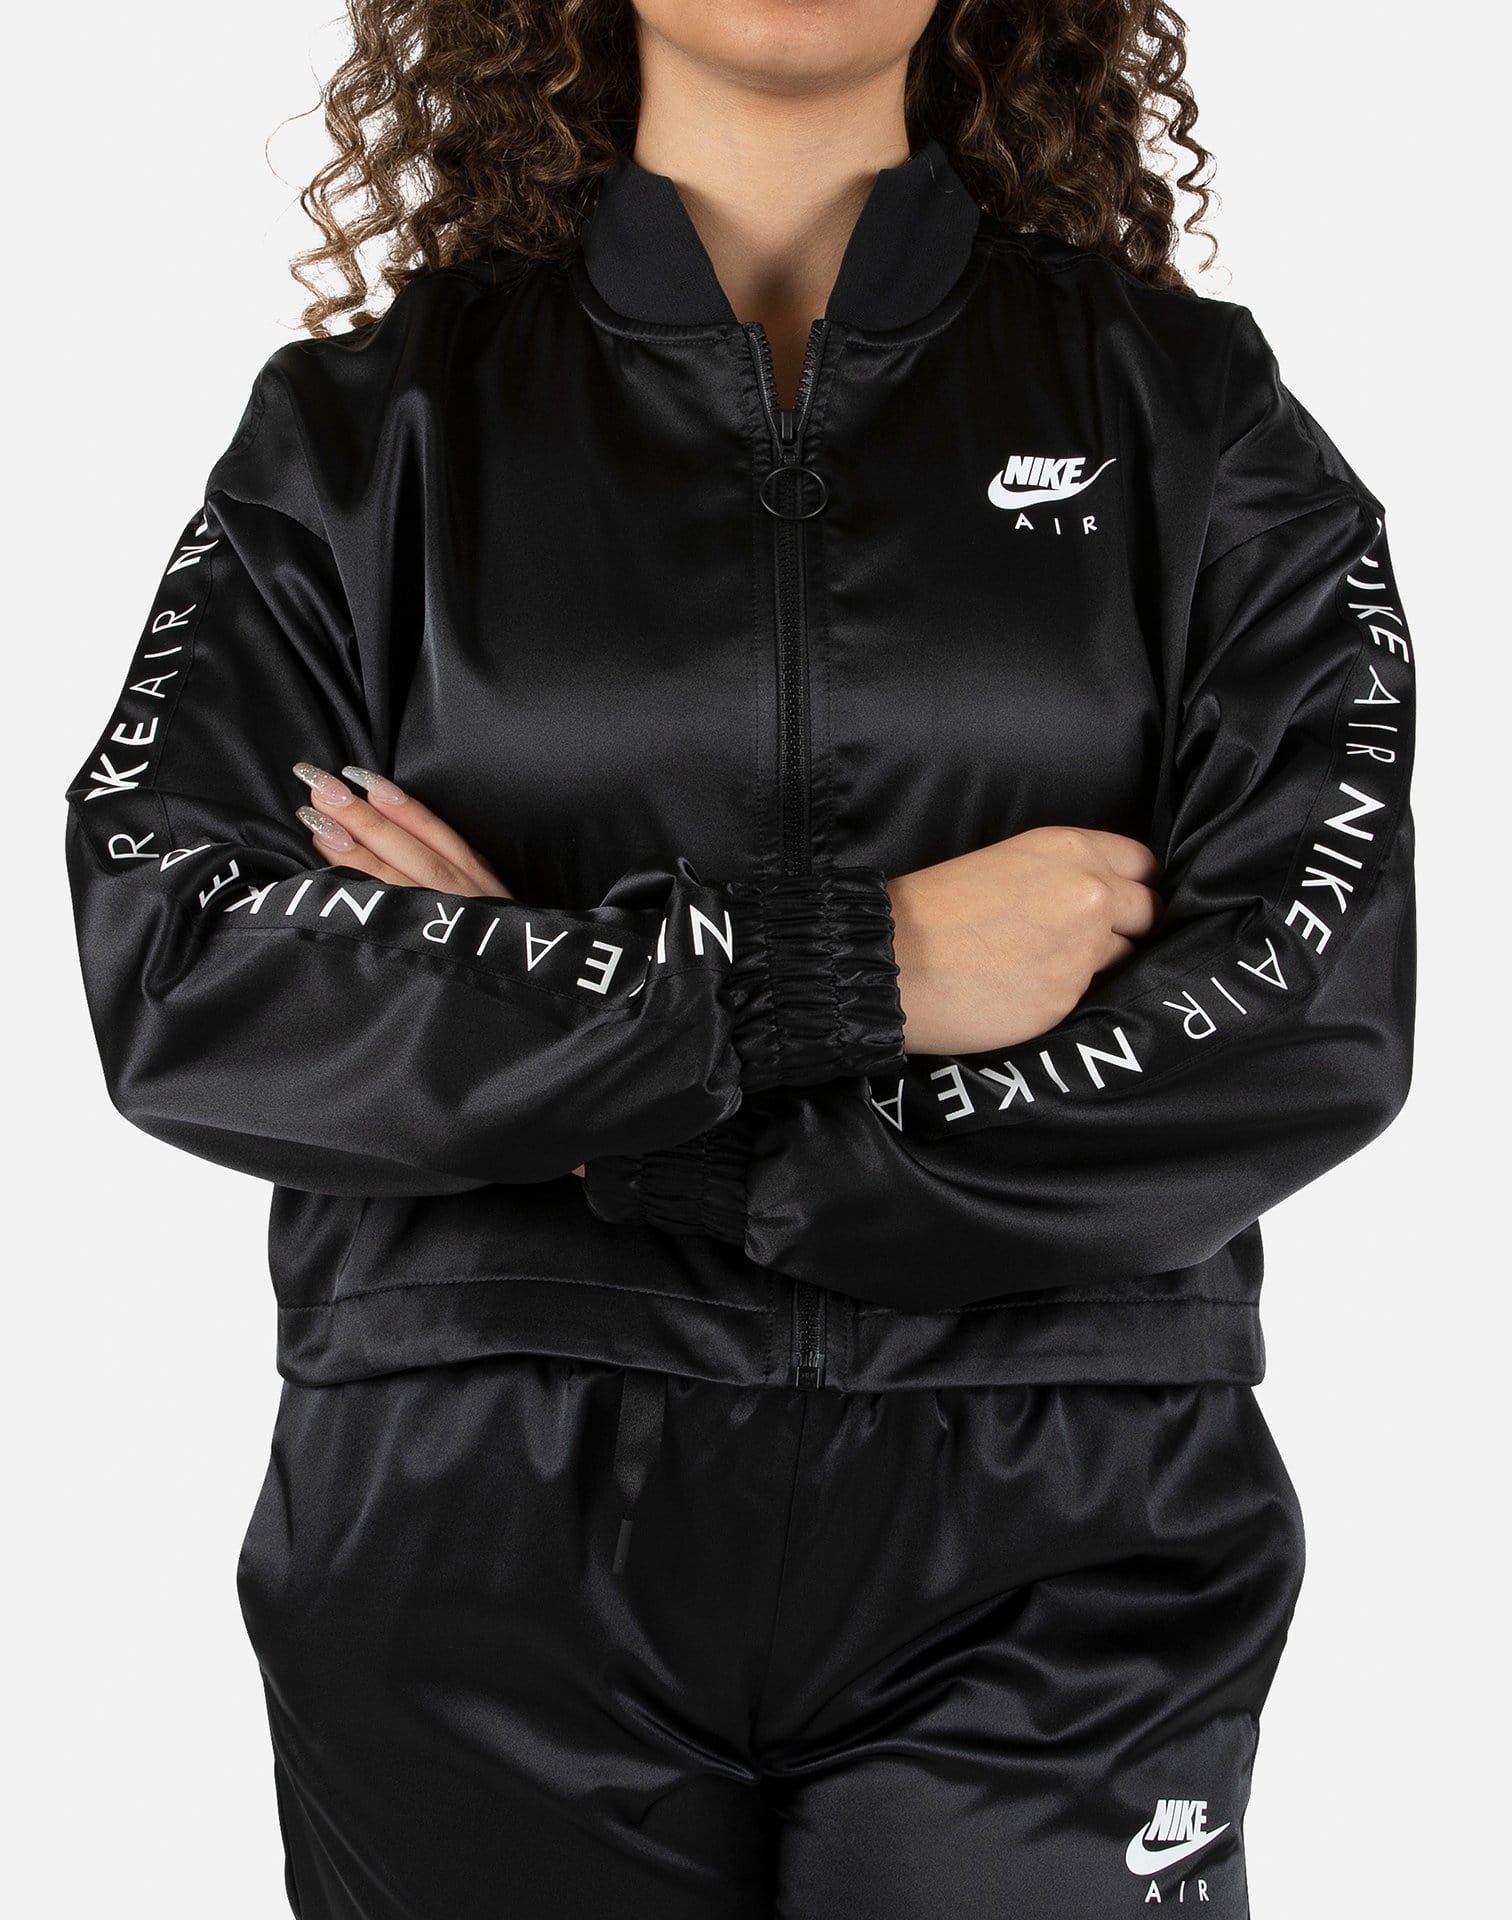 Nike Women's Air Satin Track Jacket